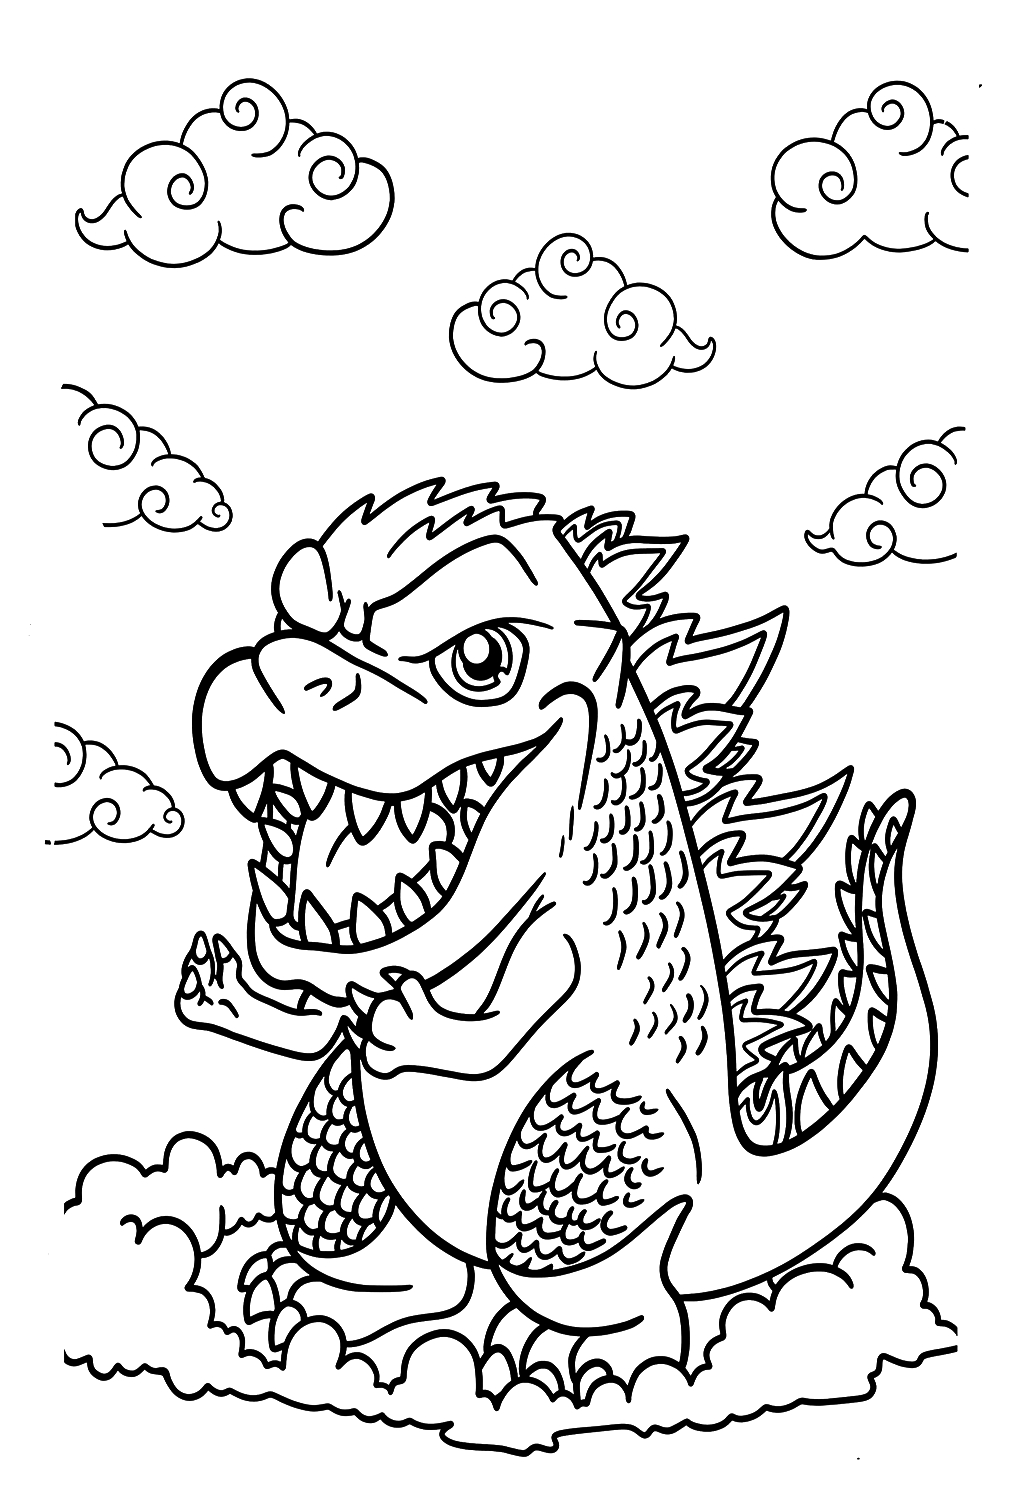 Página para colorear de Chibi Godzilla de Godzilla